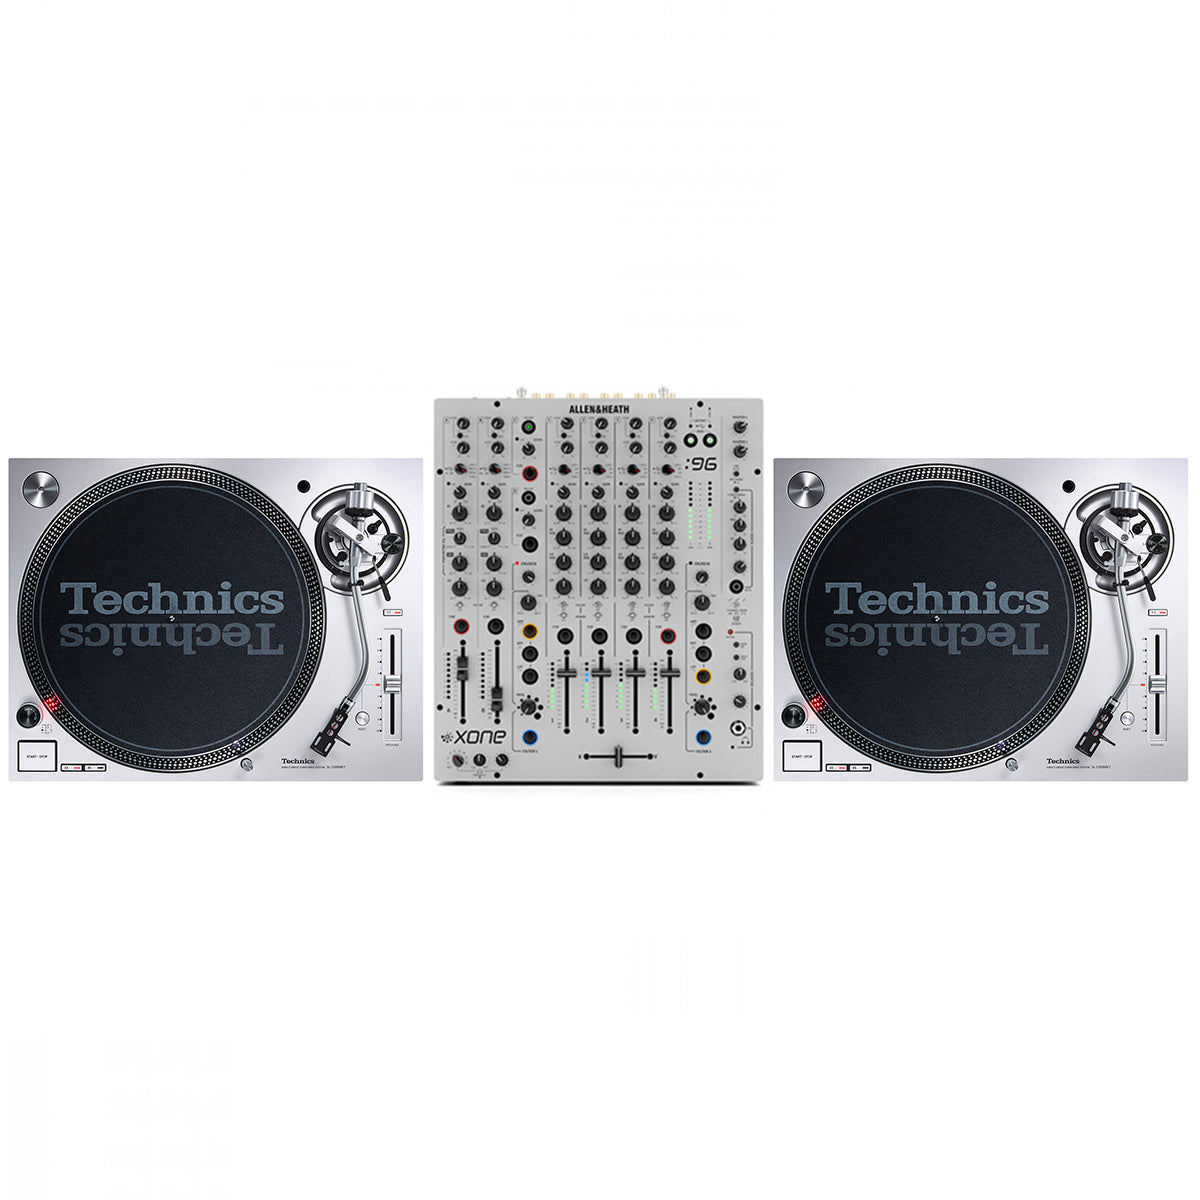 Technics SL1200 MK7 + XONE:96 Mixer